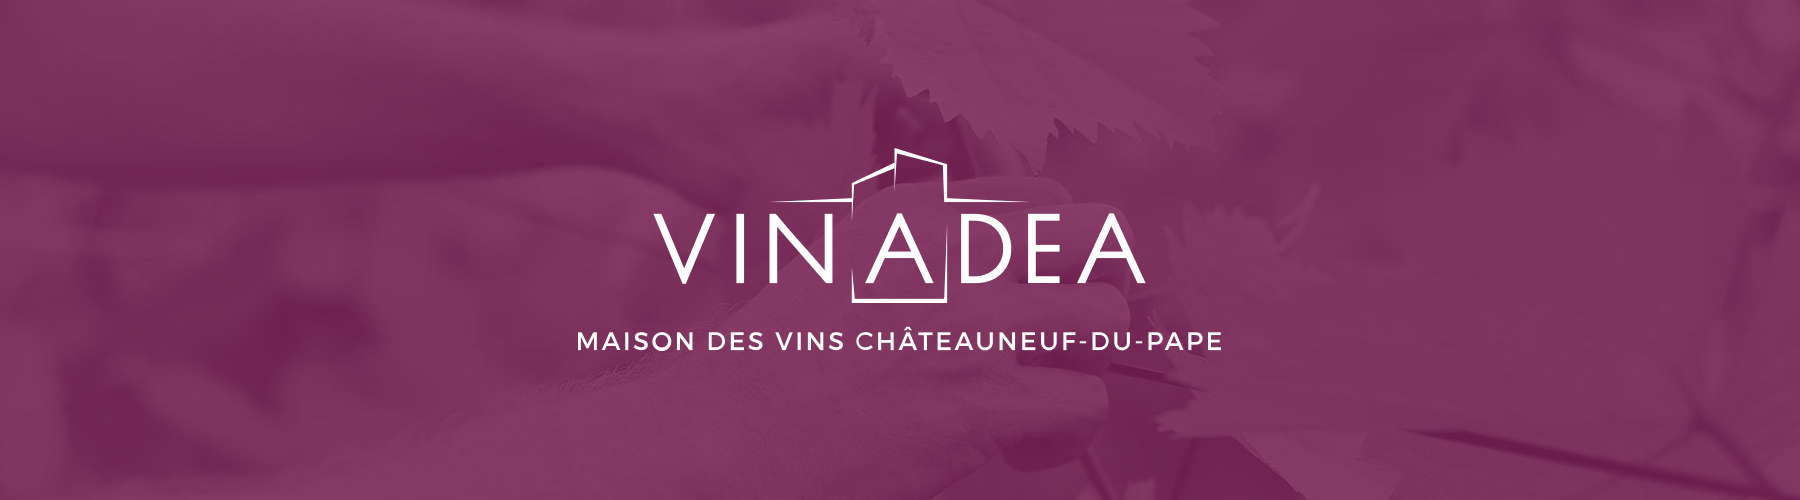 Vinadea: Das Haus der Weine Châteauneuf-du-Pape